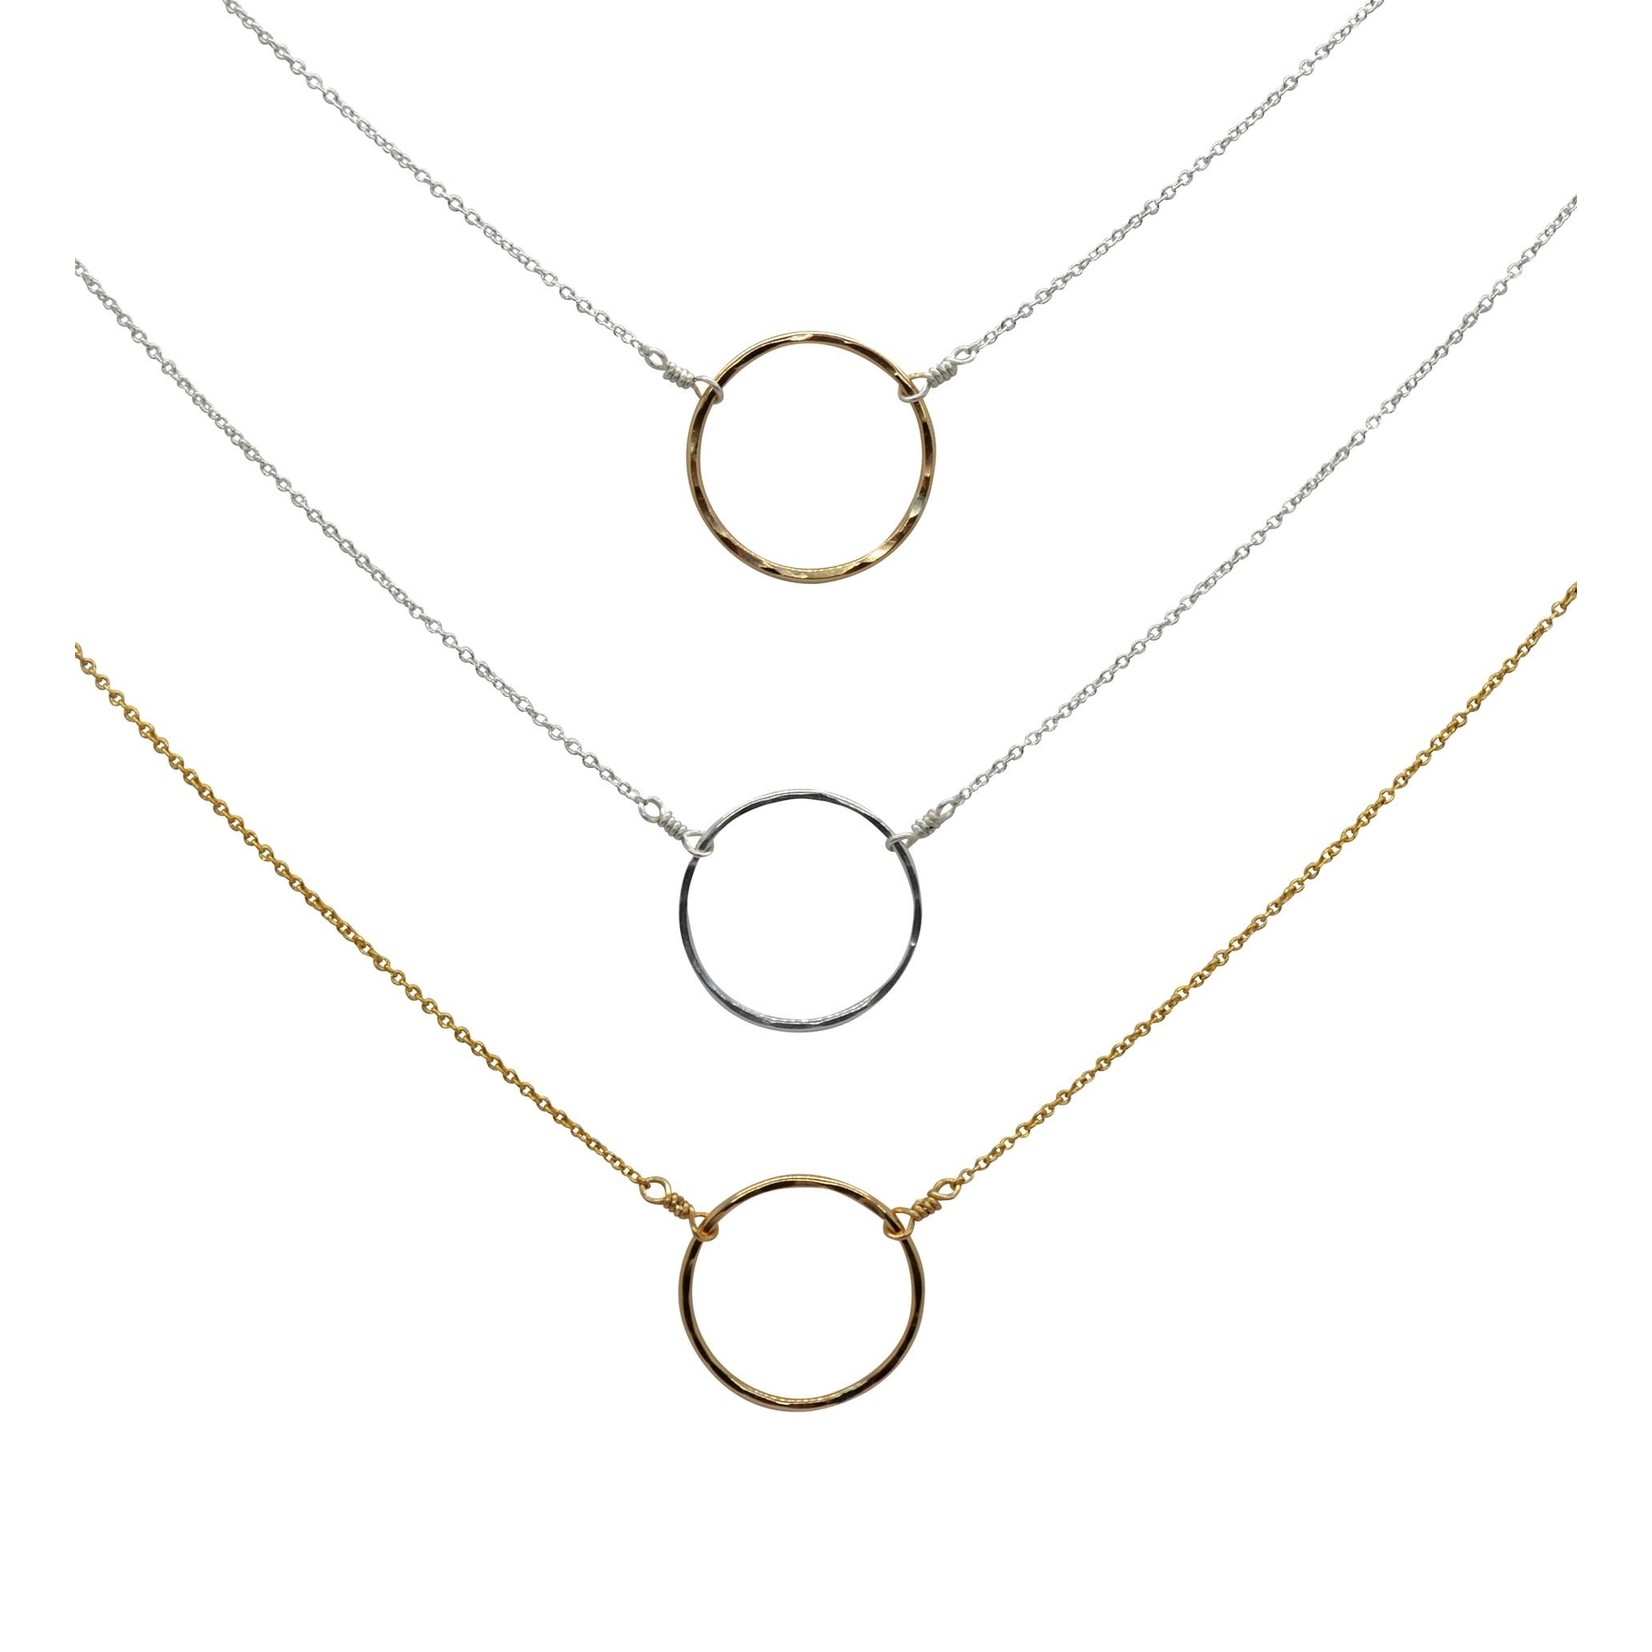 Tamacino "Aspen" - large circle necklace